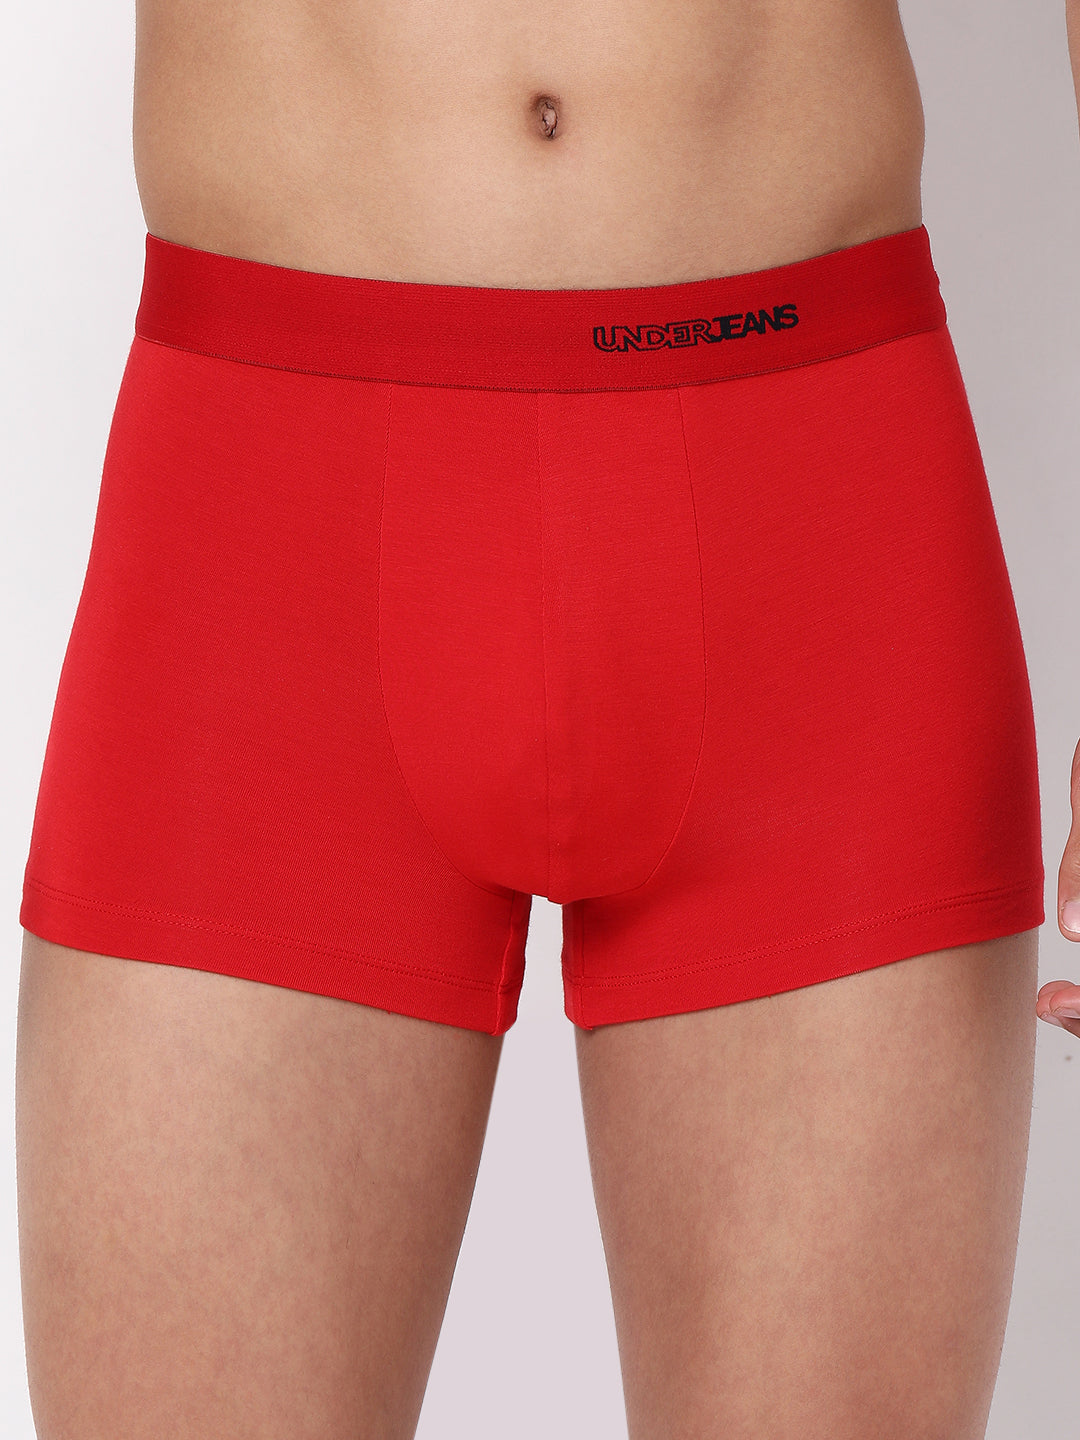 Men Premium Micromodal Red Trunk - UnderJeans by Spykar